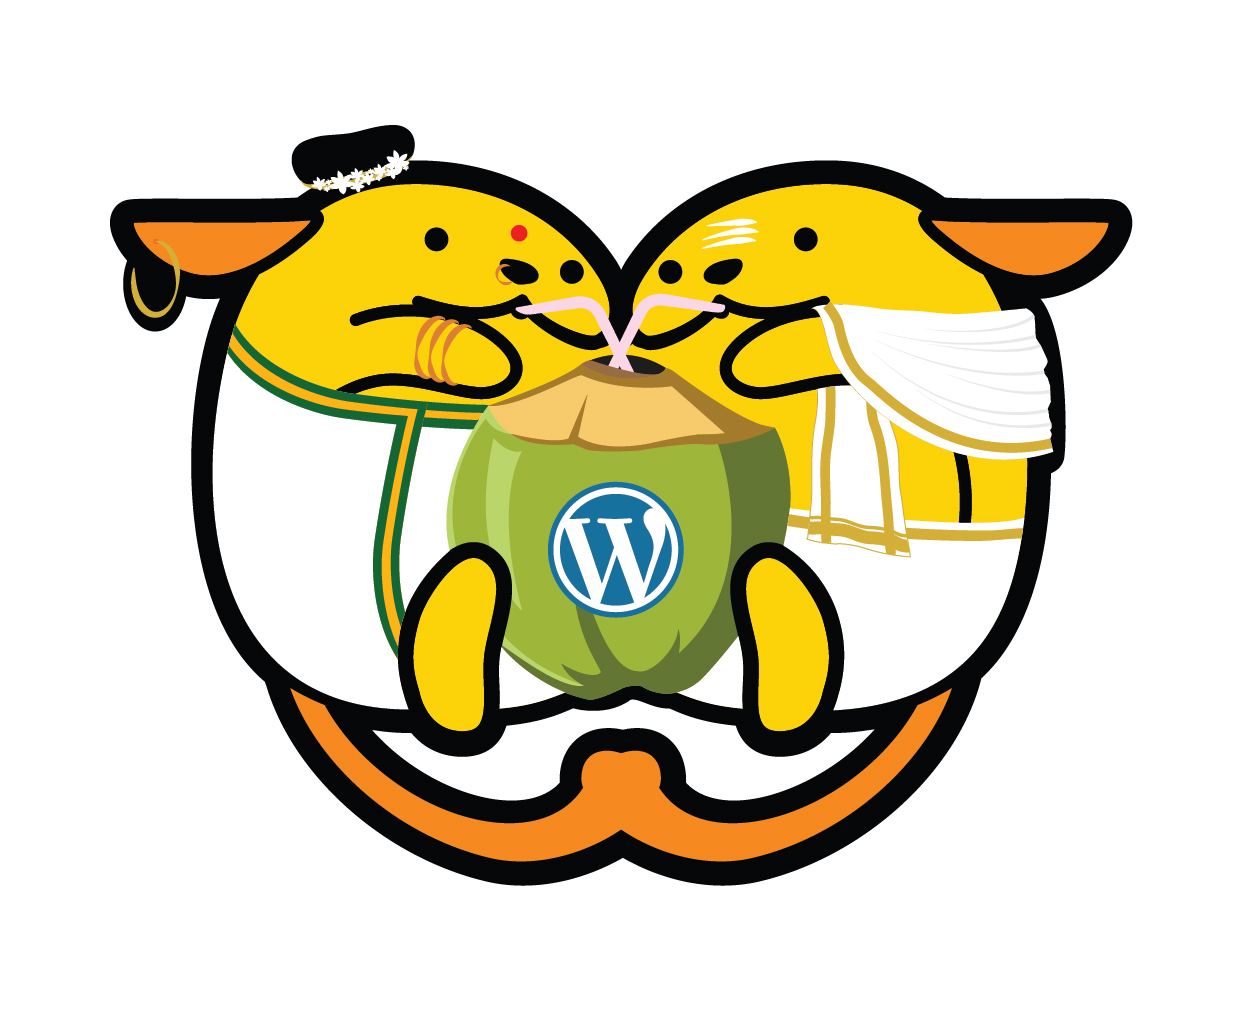 Official Wapuu for WordCamp Kochi - Ammu & Appu.